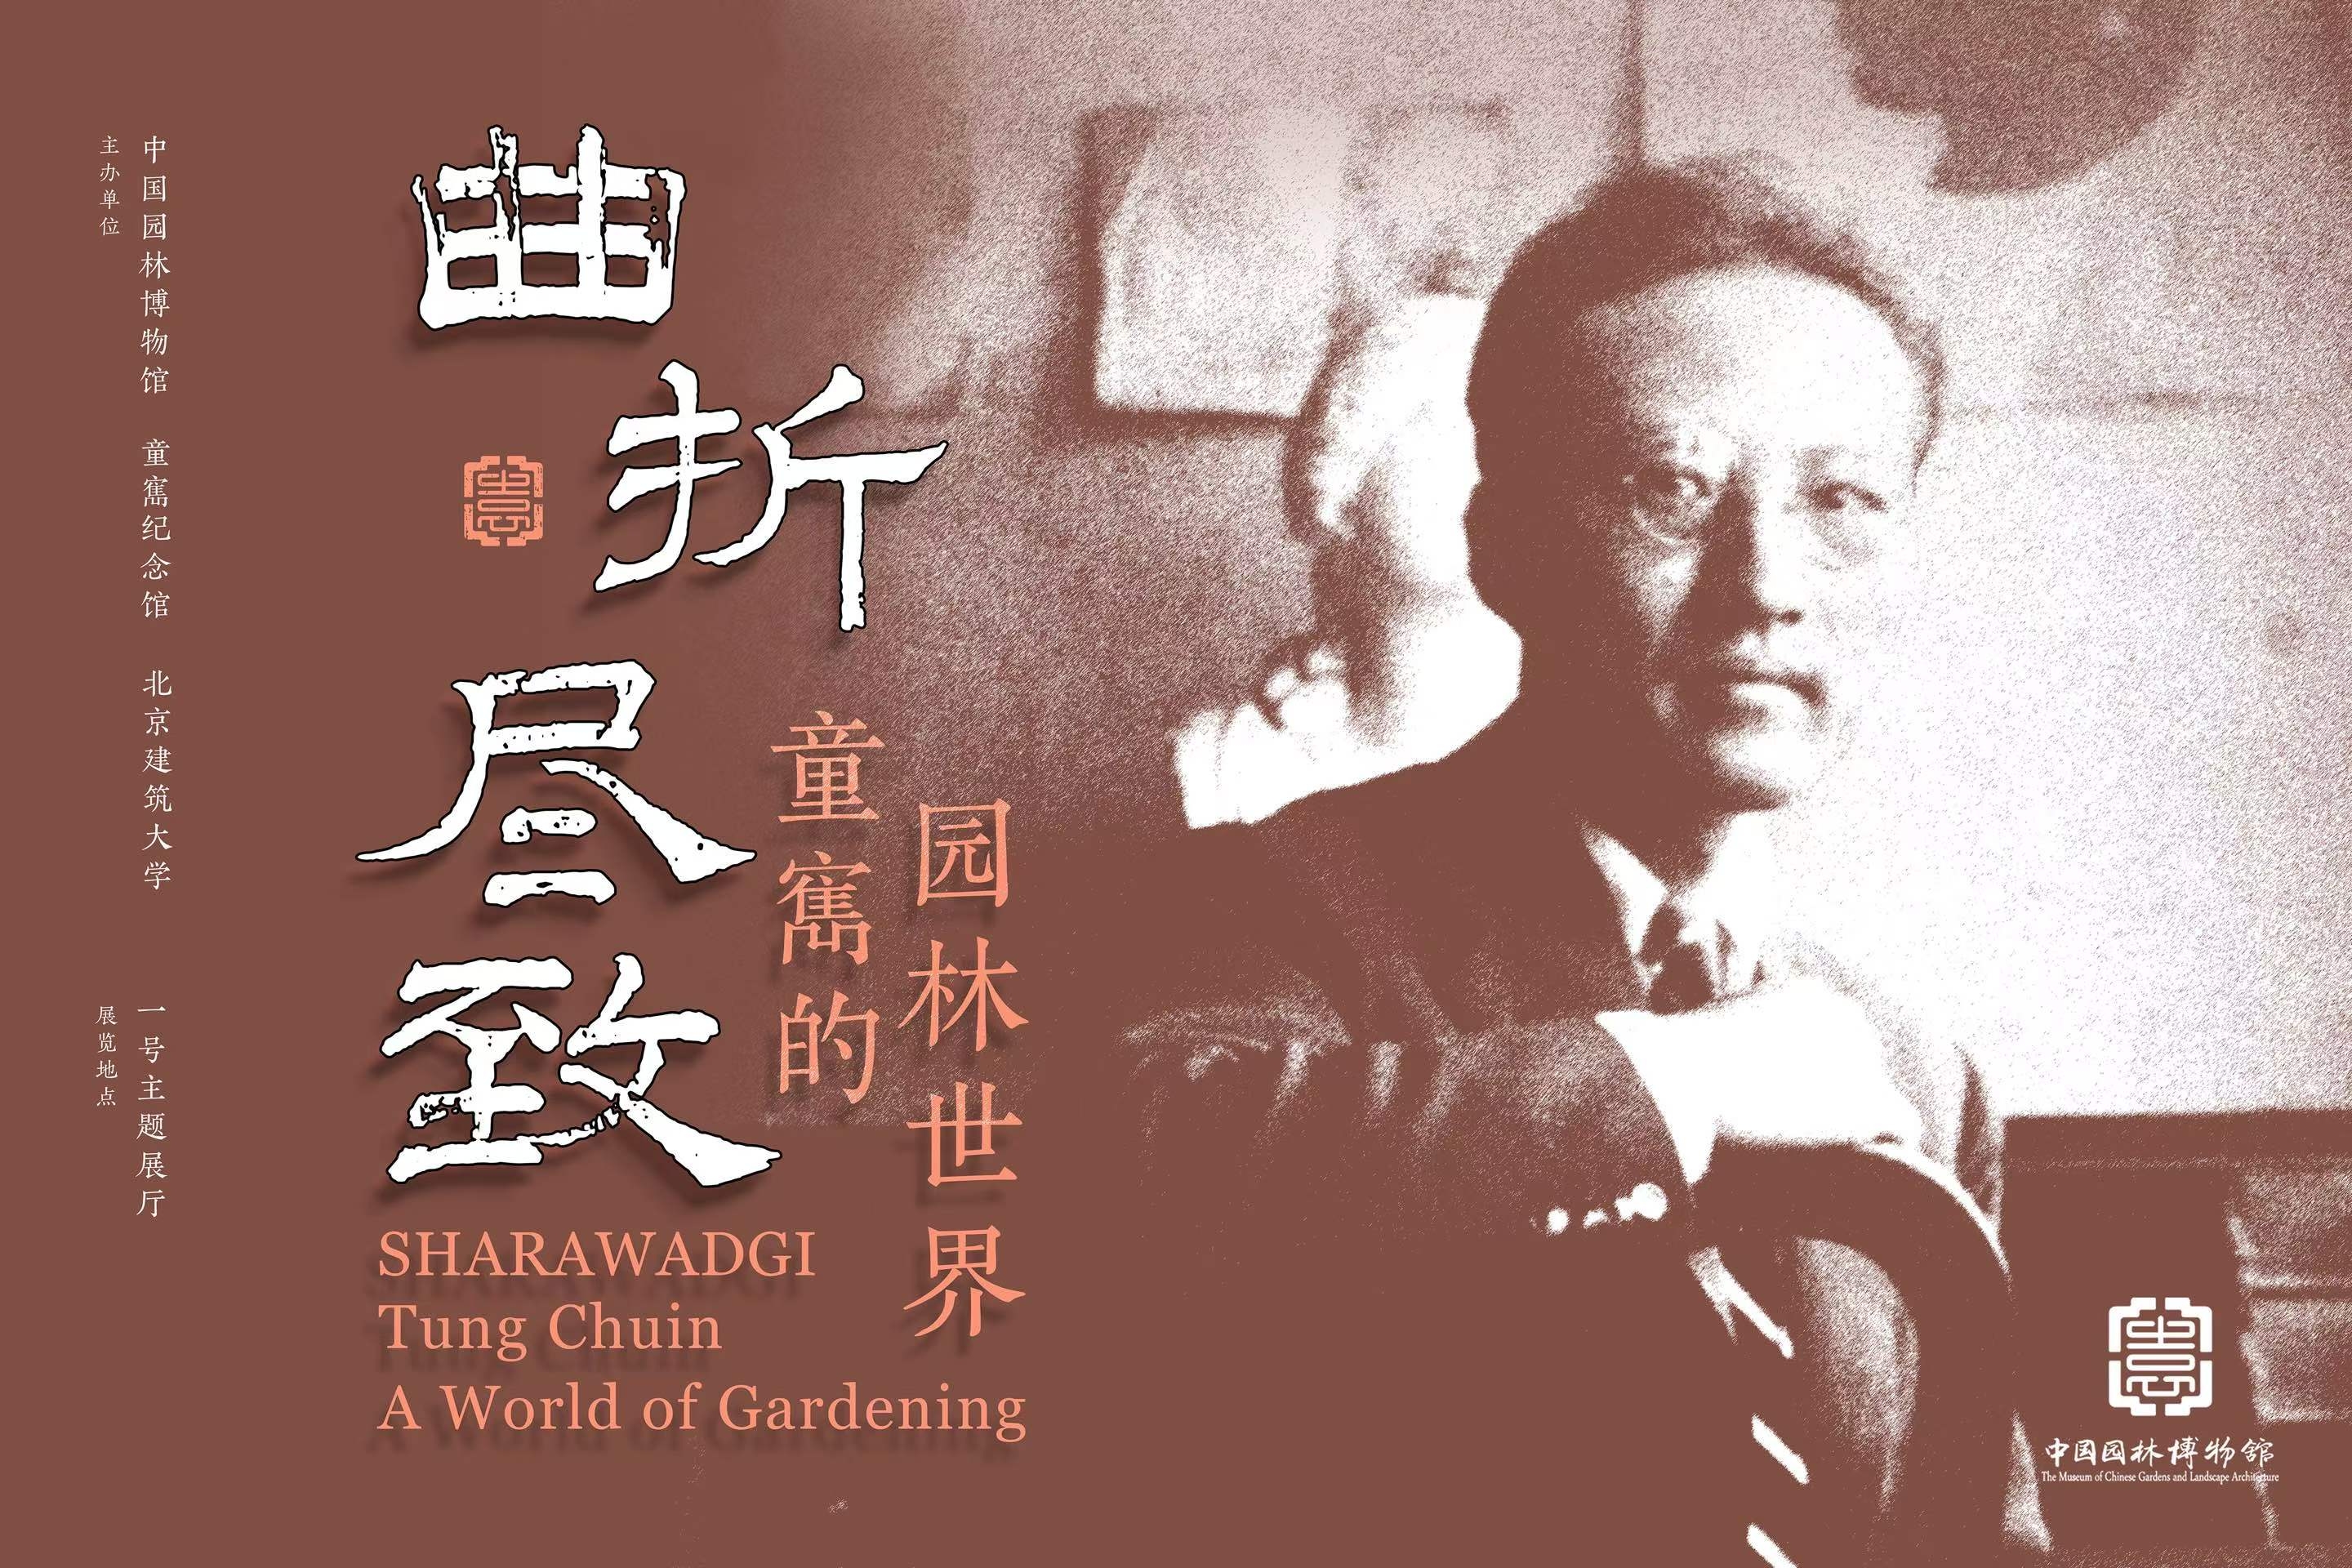 Sharawadgi: Tung Chuin, A World of Gardening